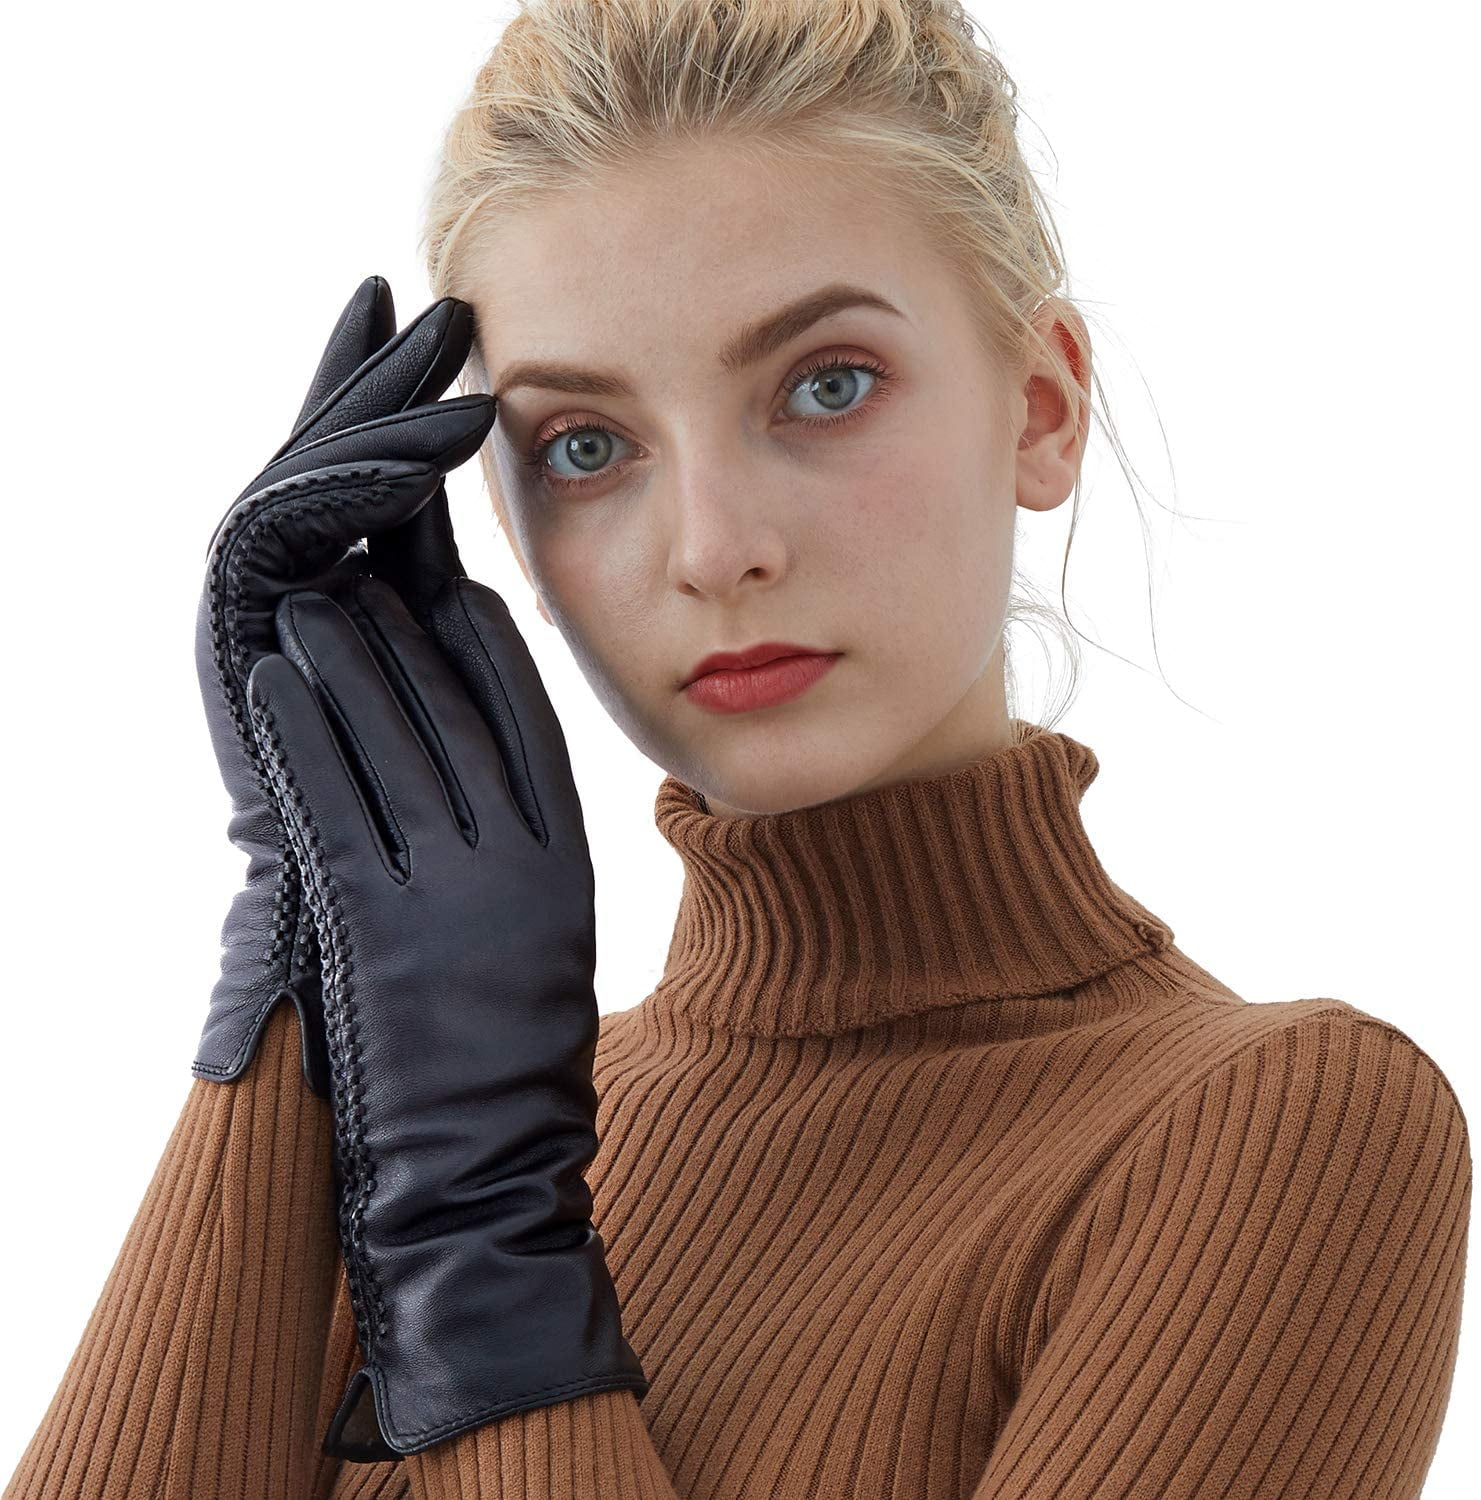 UXZDX Ladies Sheepskin Black Gloves Leather Fashion Winter Warmth Beautiful  Leather (Color : Black, Size : 9)